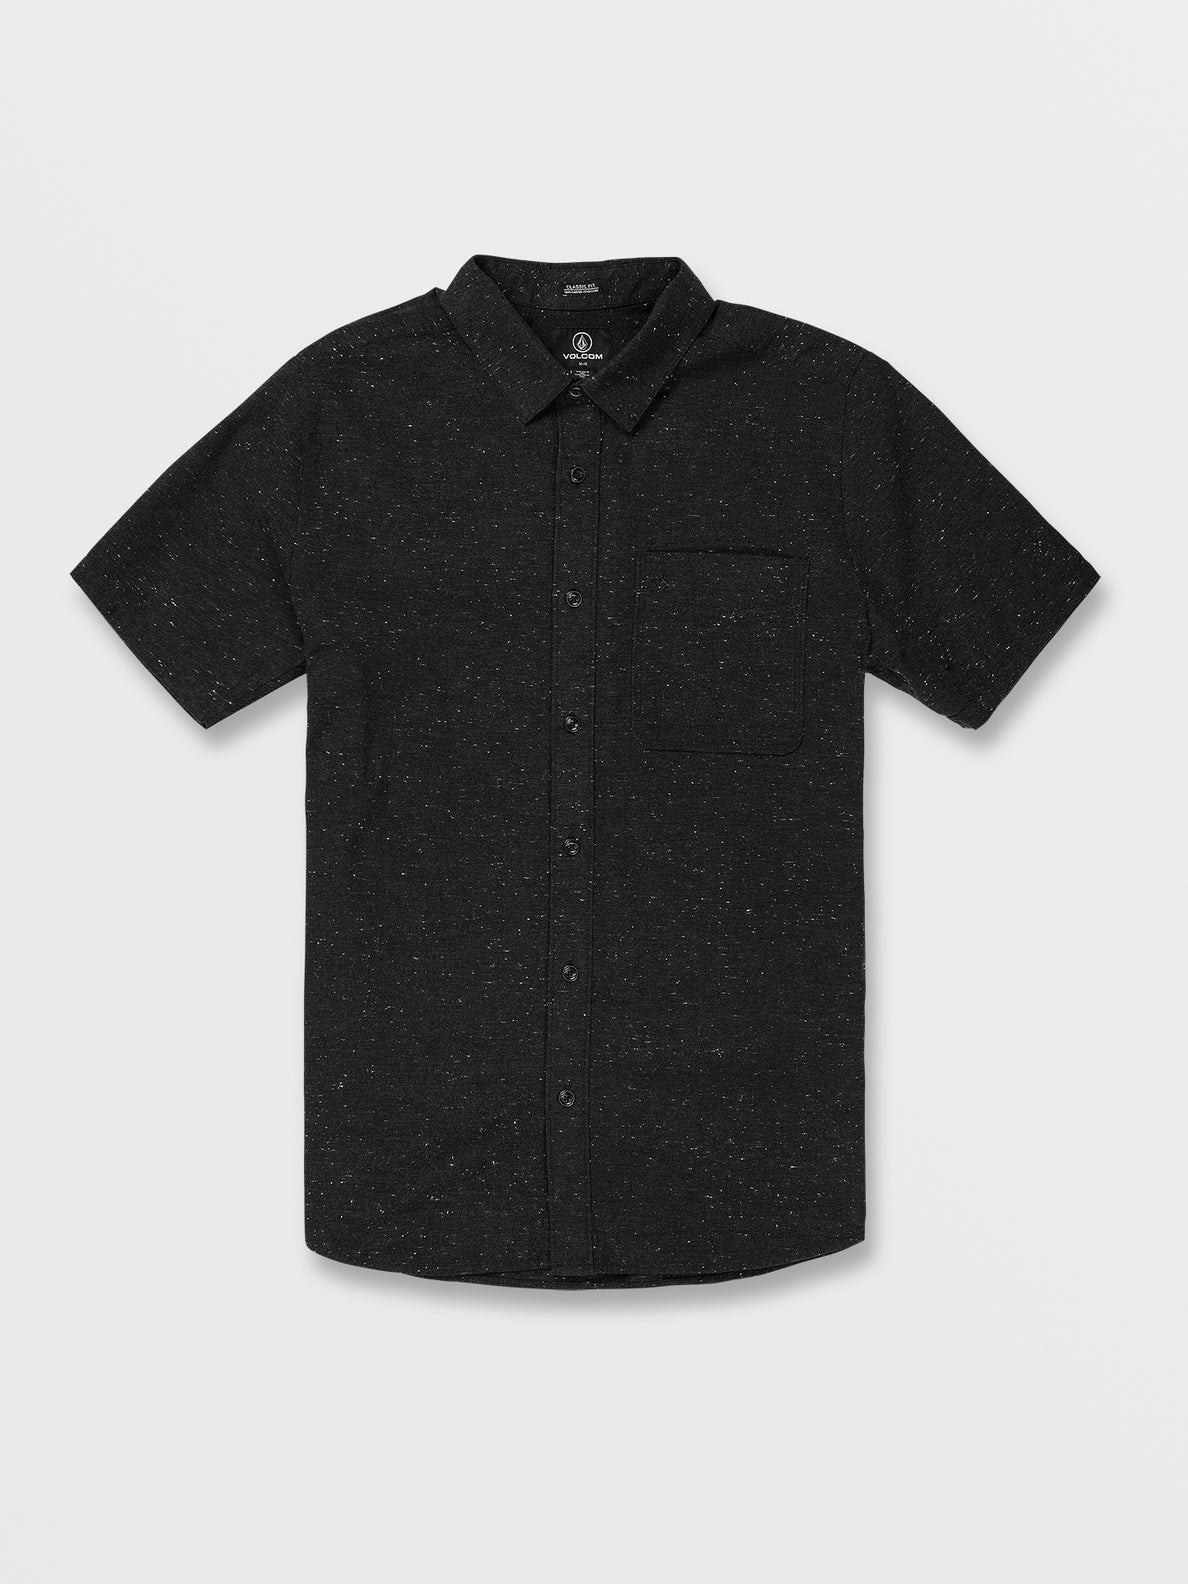 Volcom Date Knight Short Sleeve Shirt - Black